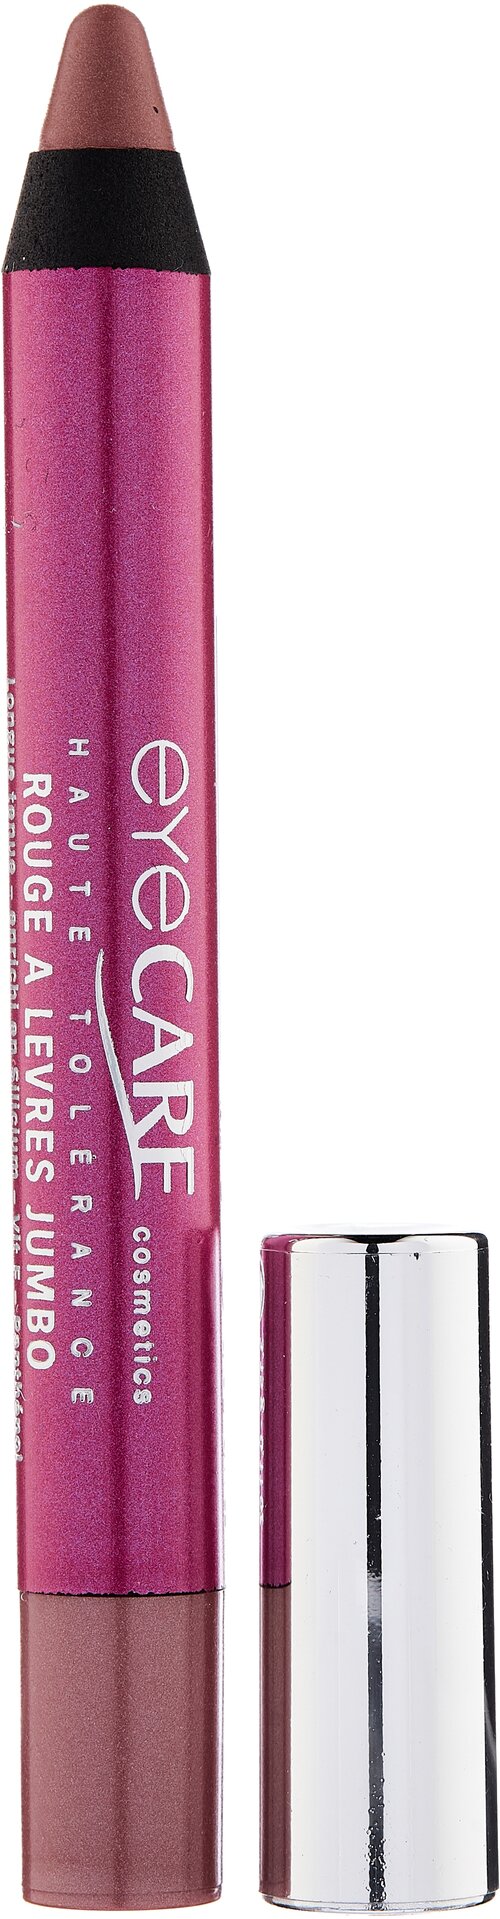 Eye Care Cosmetics Помада-карандаш для губ Jumbo, оттенок cognac